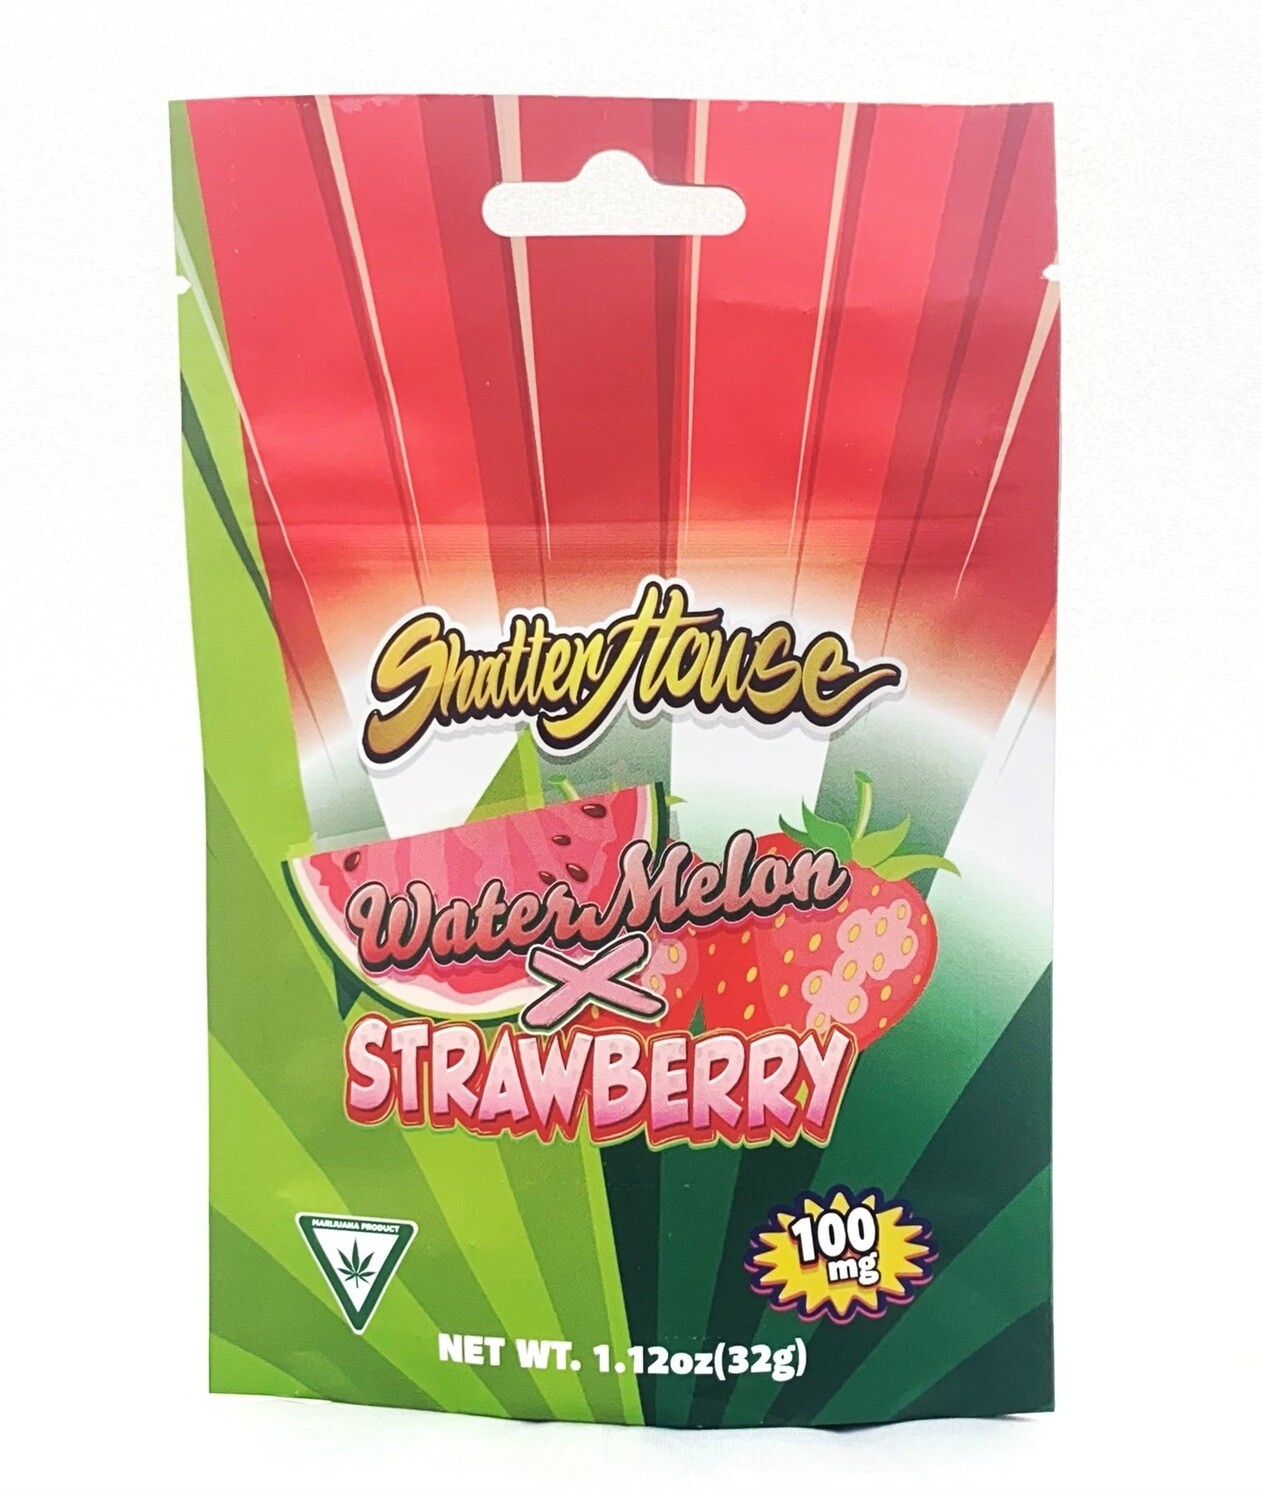 Shatter House - Watermelon x Strawberry Gummies